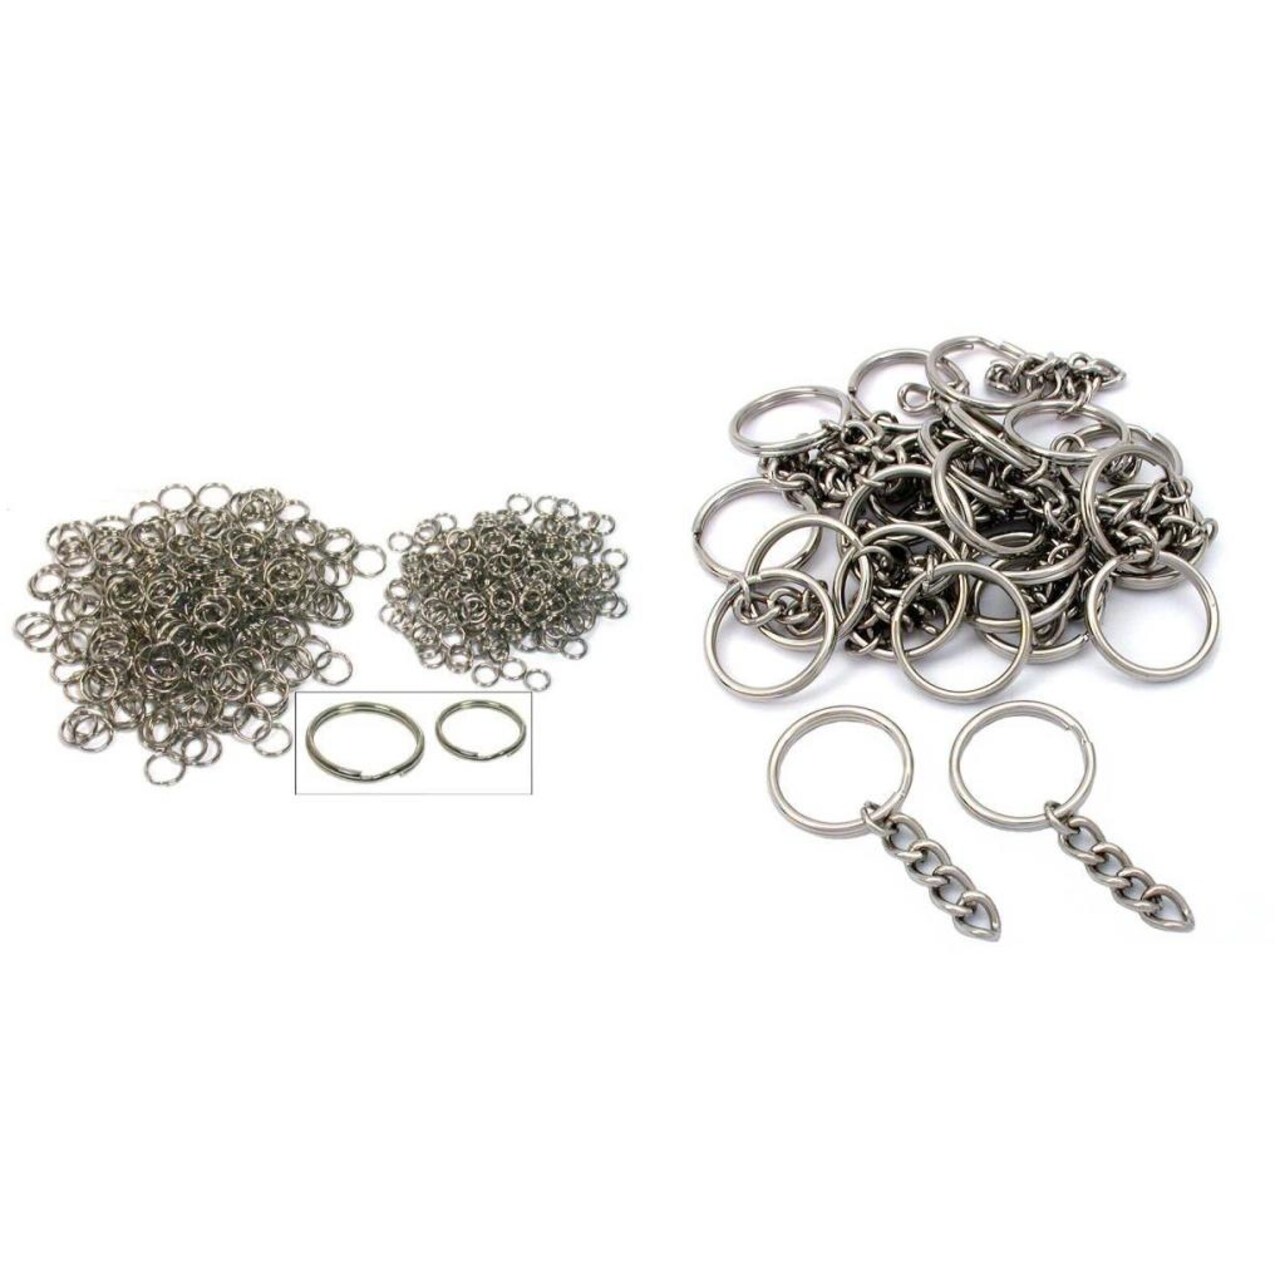 Nickel Plated 6mm & 9mm Split Rings & Key Chain Rings w/ Chain Kit 600 Pcs